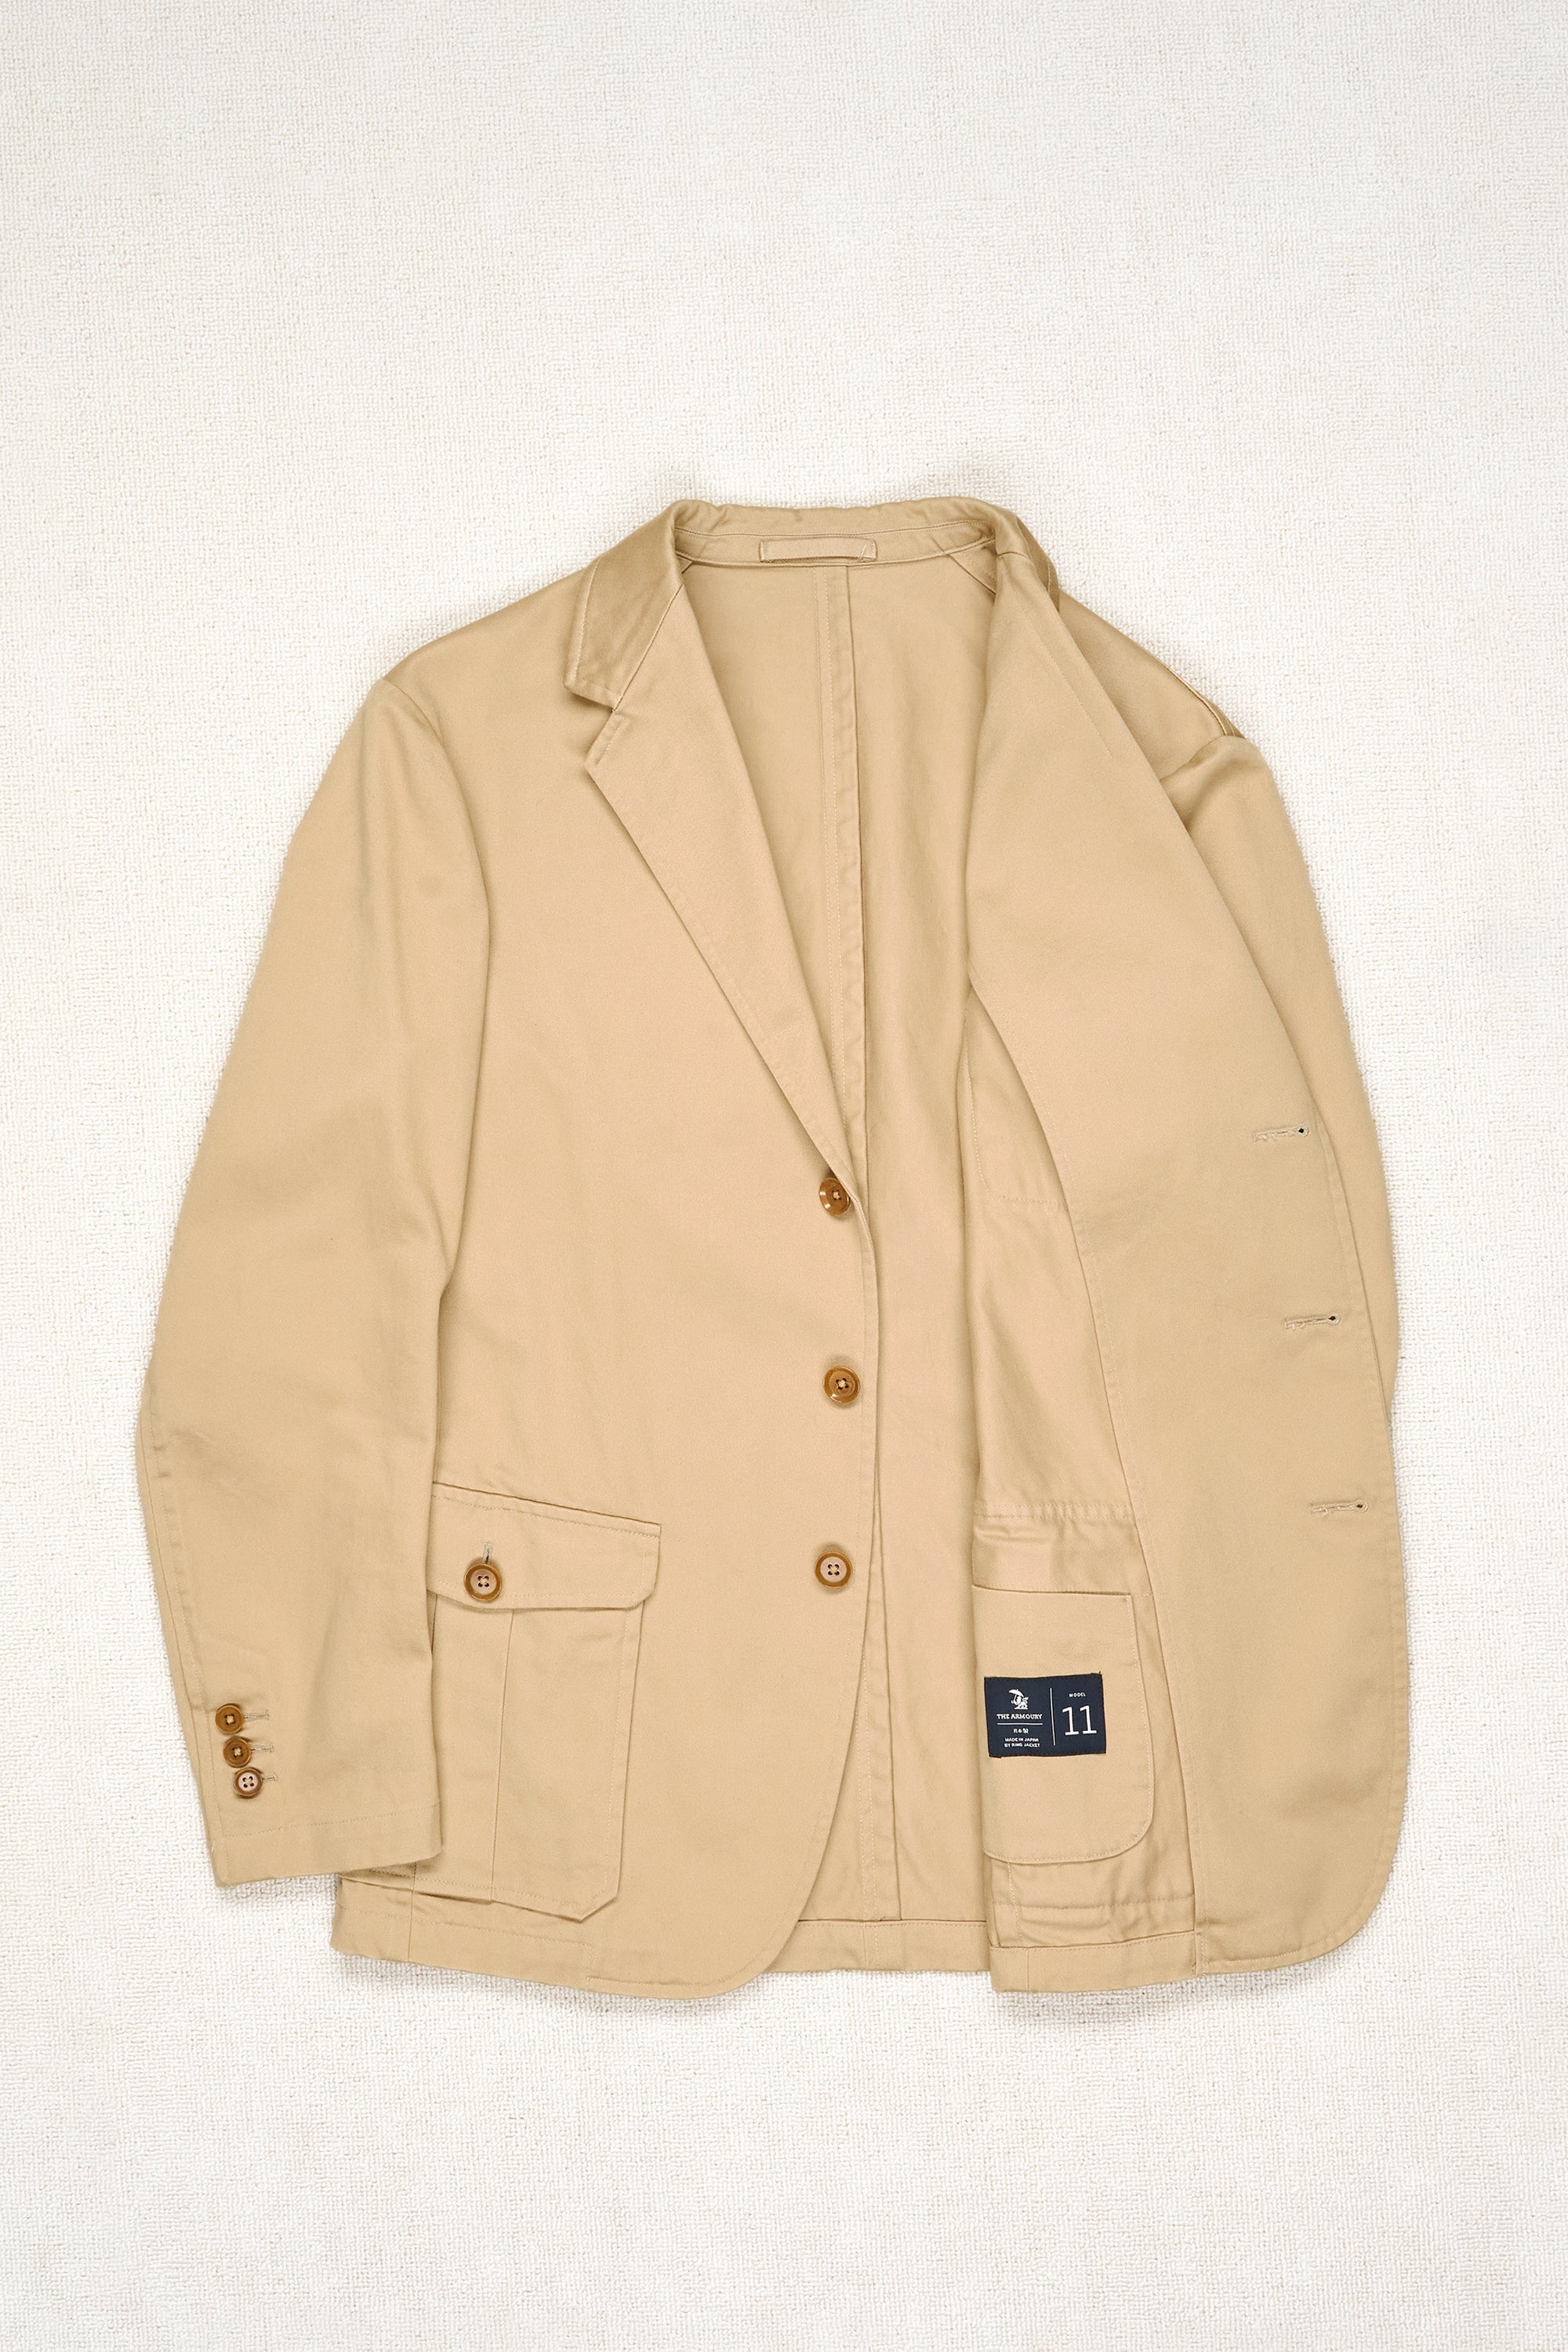 The Armoury by Ring Jacket Model 11 Khaki Cotton Sport Coat